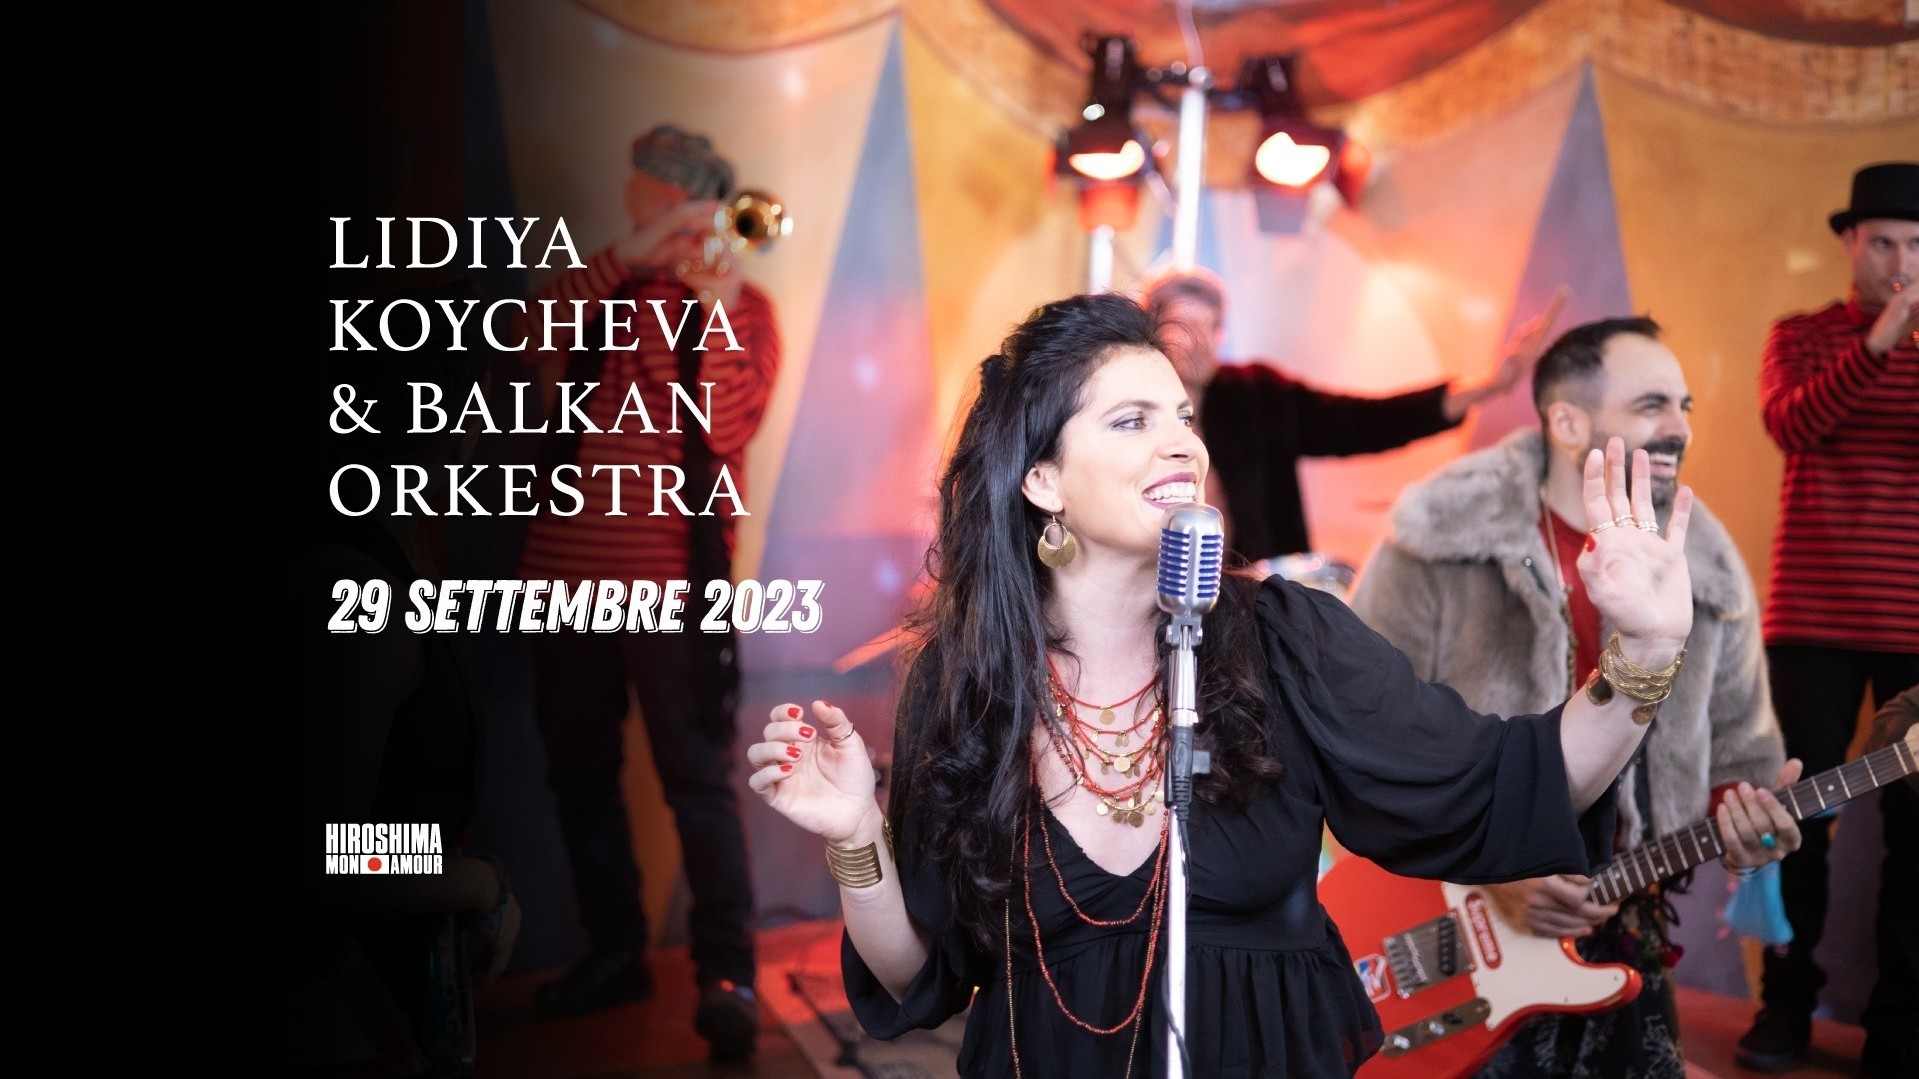 Lidiya Koycheva & Balkan Orkestra